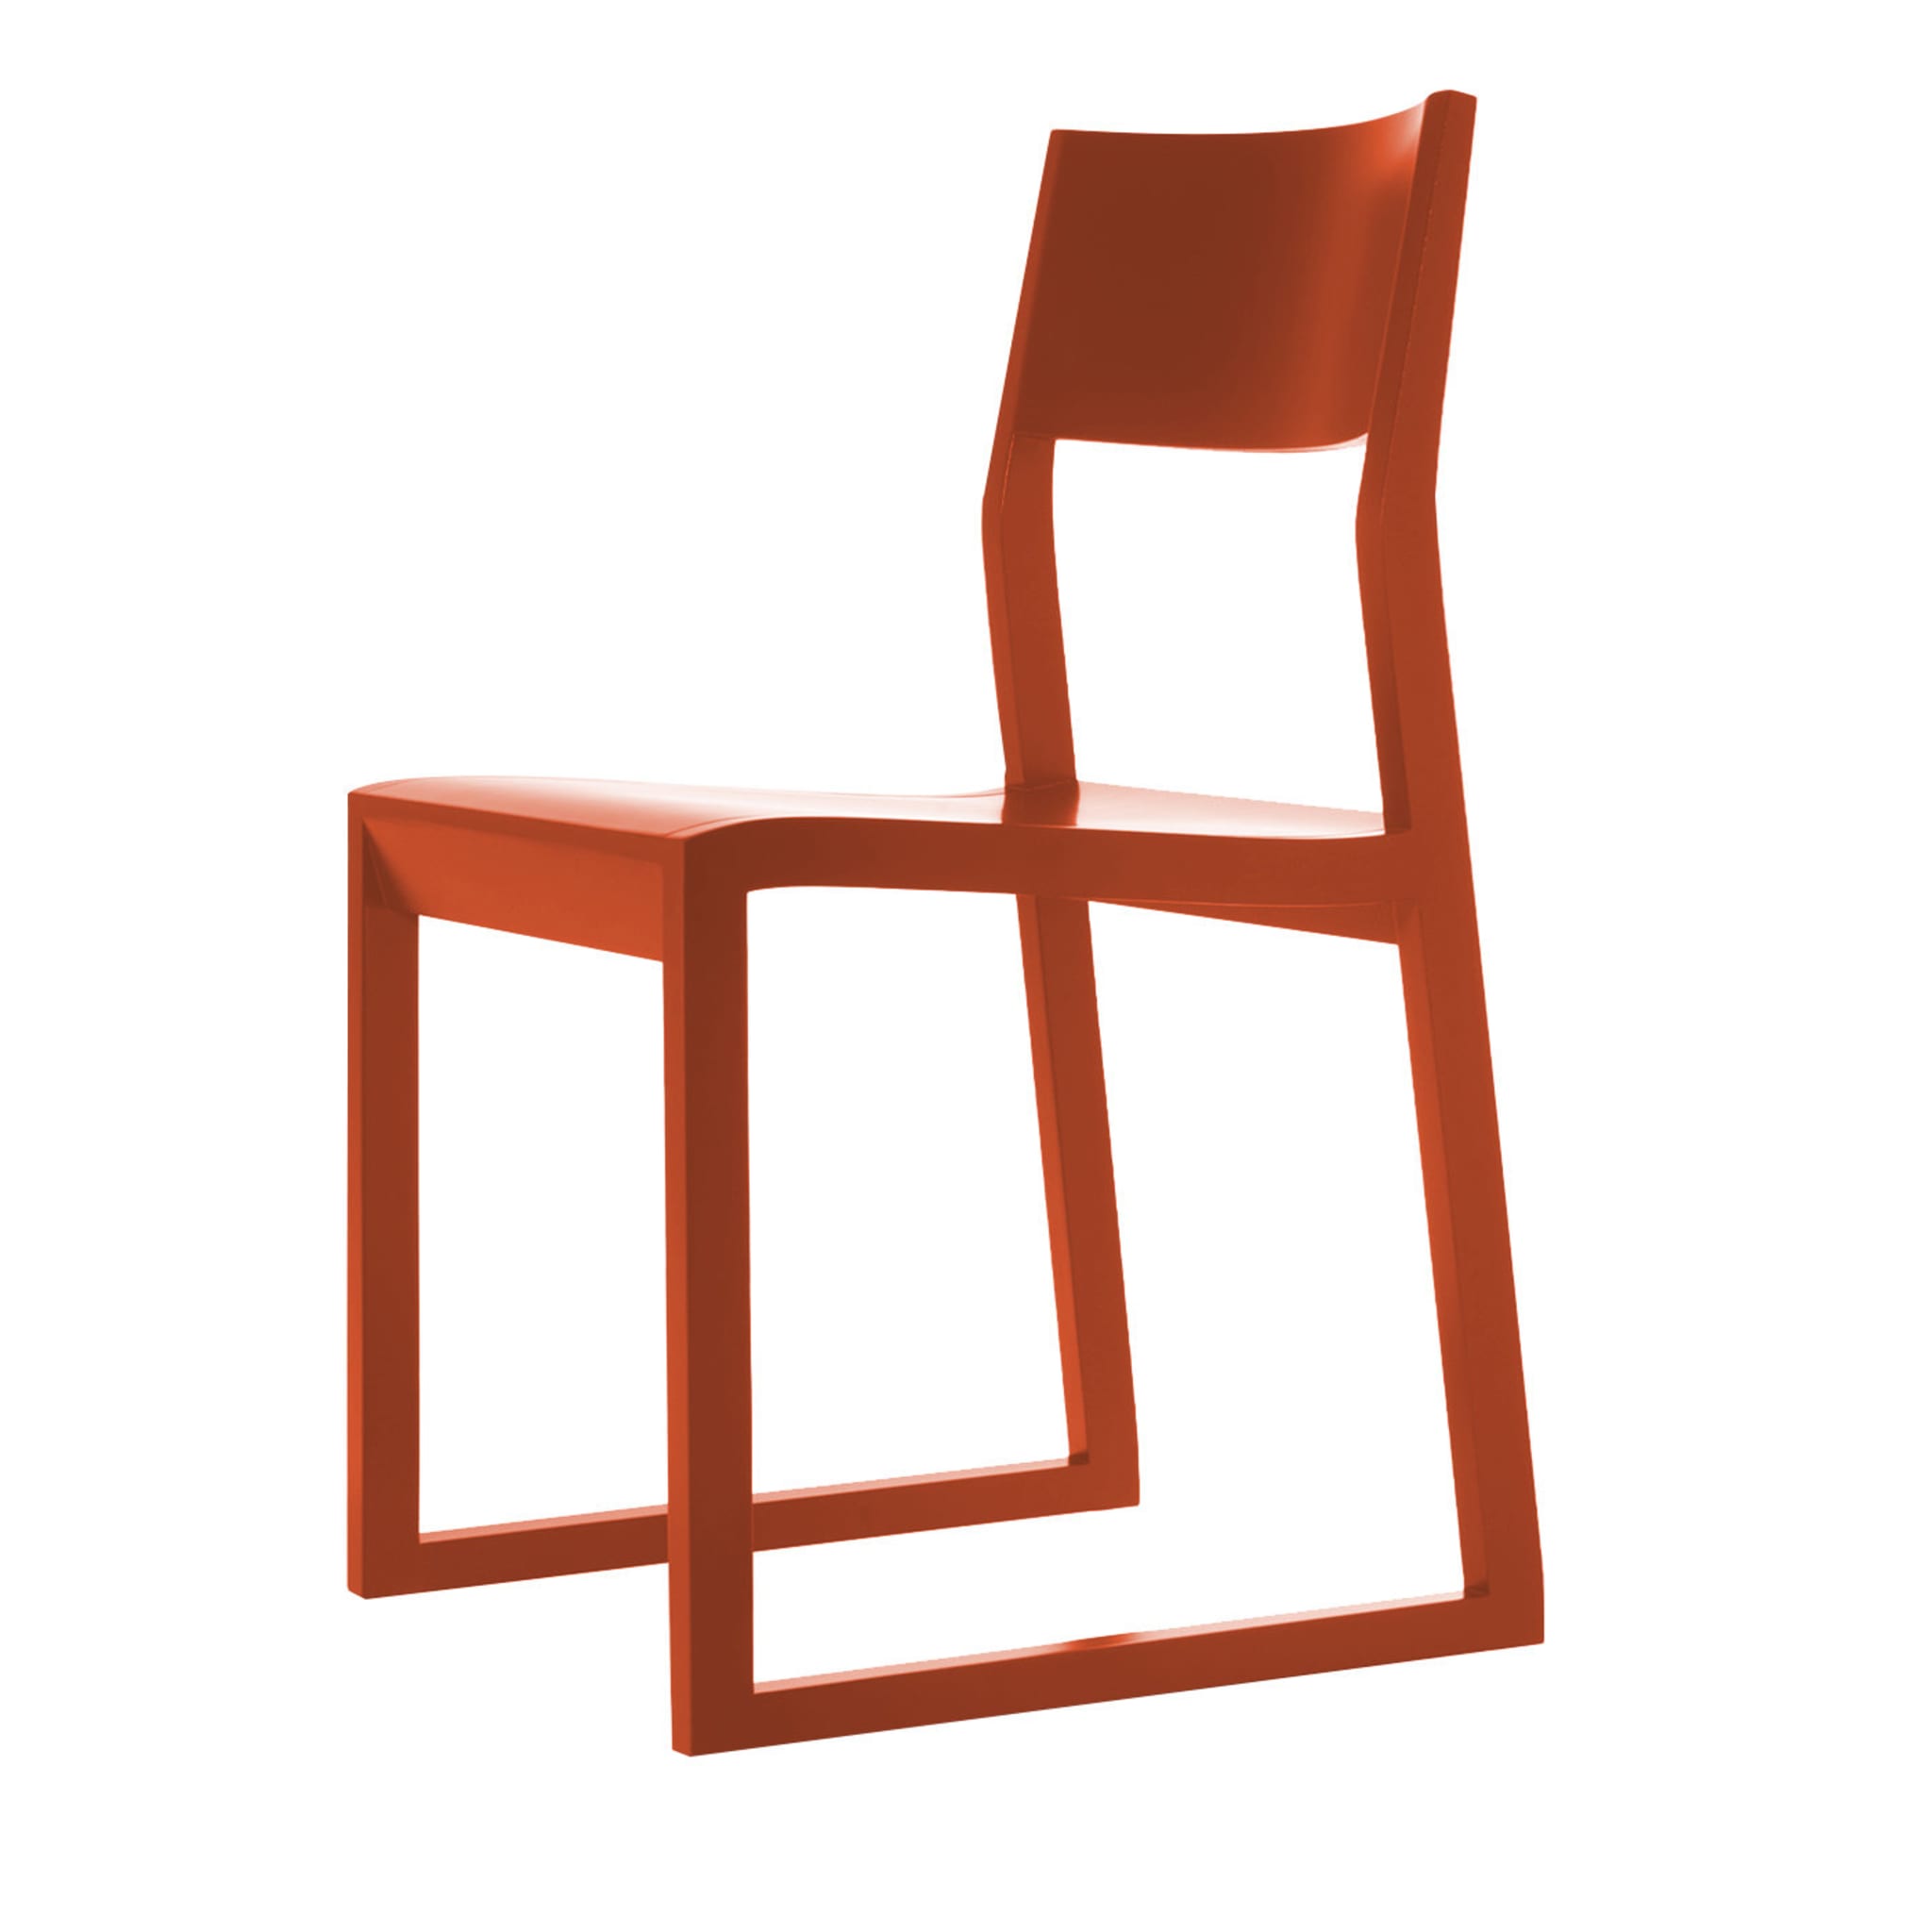 Set of 2 Red Sciza Chairs by Takashi Kirimoto - Main view